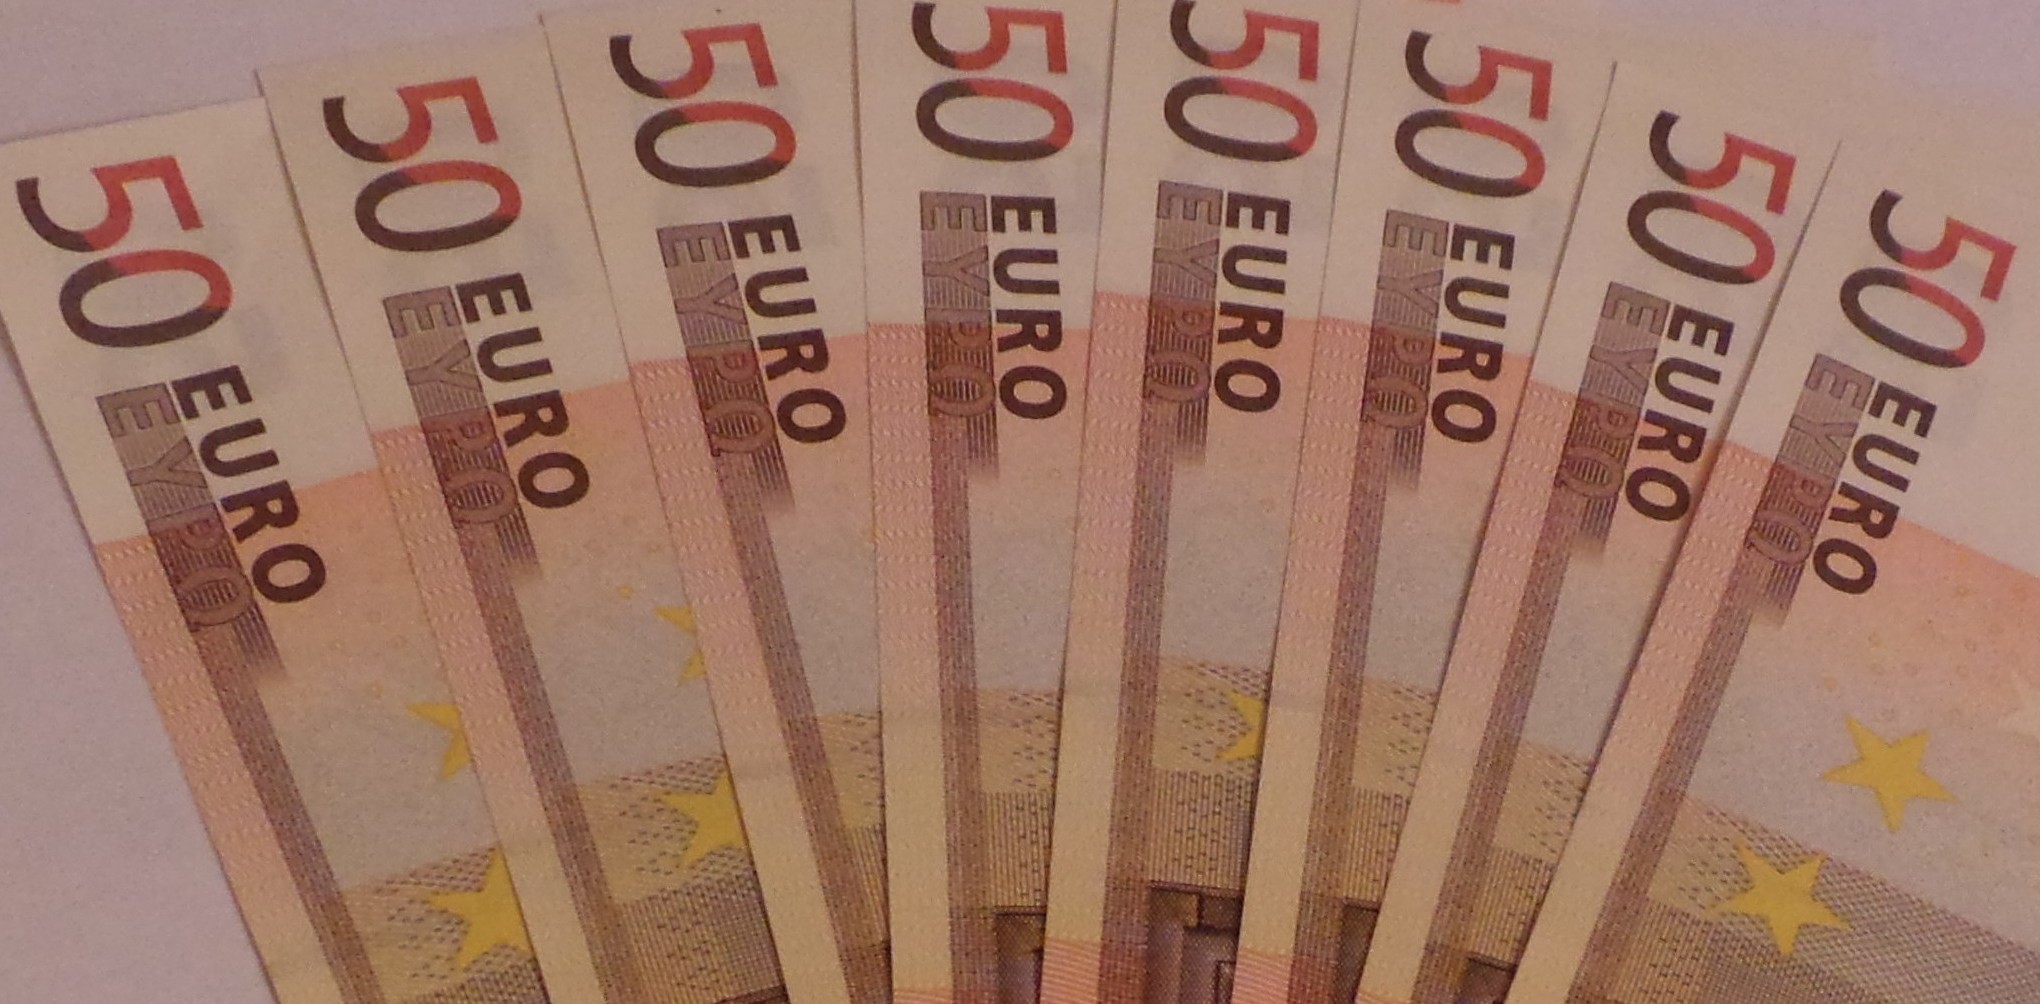 Bild: GR8DAN (https://upload.wikimedia.org/wikipedia/commons/thumb/8/8b/400_Euros_in_50_Euro_notes.jpg/1045px-400_Euros_in_50_Euro_notes.jpg). Lizenz: CC BY-SA 3.0 (https://creativecommons.org/licenses/by/3.0/de/)